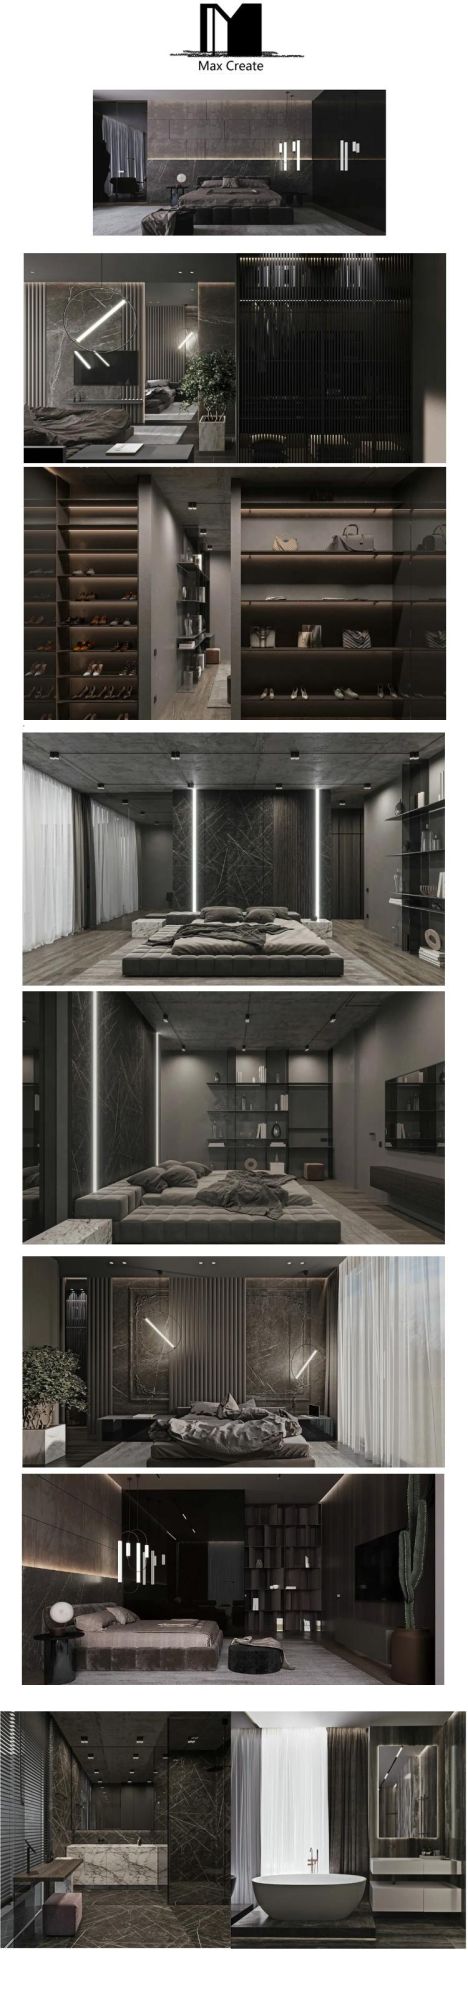 Modern Wooden Wall Bedroom Furniture Design Wardrobes Cabinet